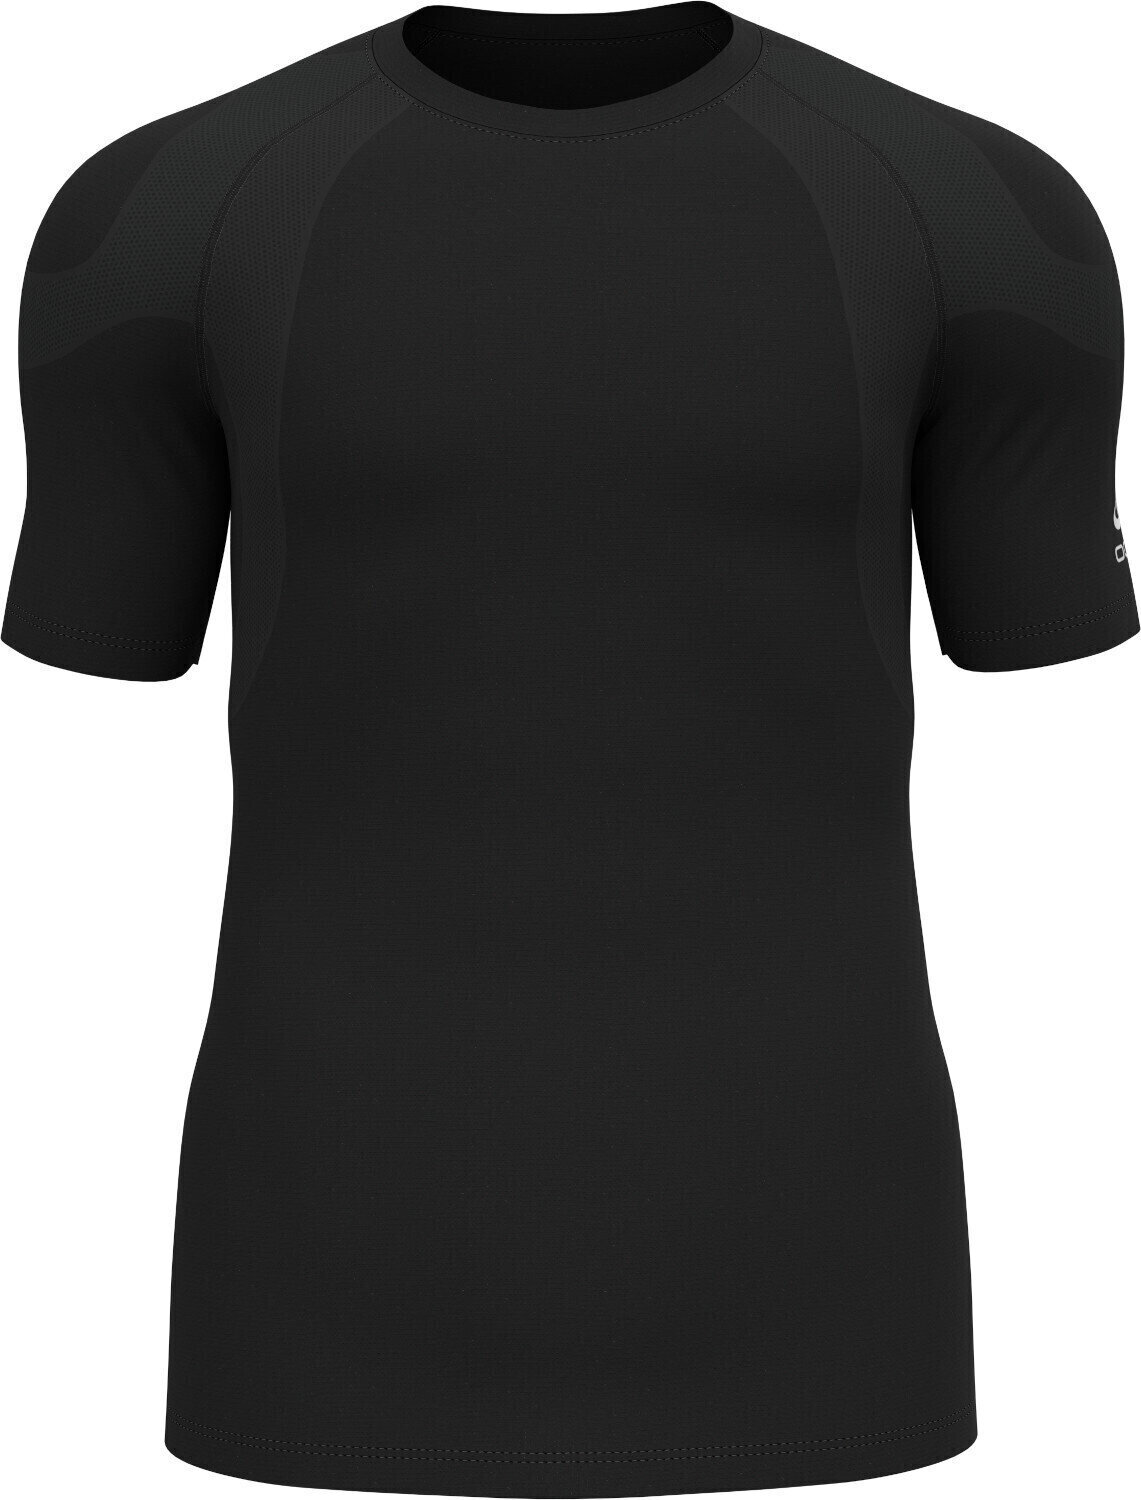 Laufshirt mit Kurzarm
 Odlo Active Spine 2.0 T-Shirt Black S Laufshirt mit Kurzarm